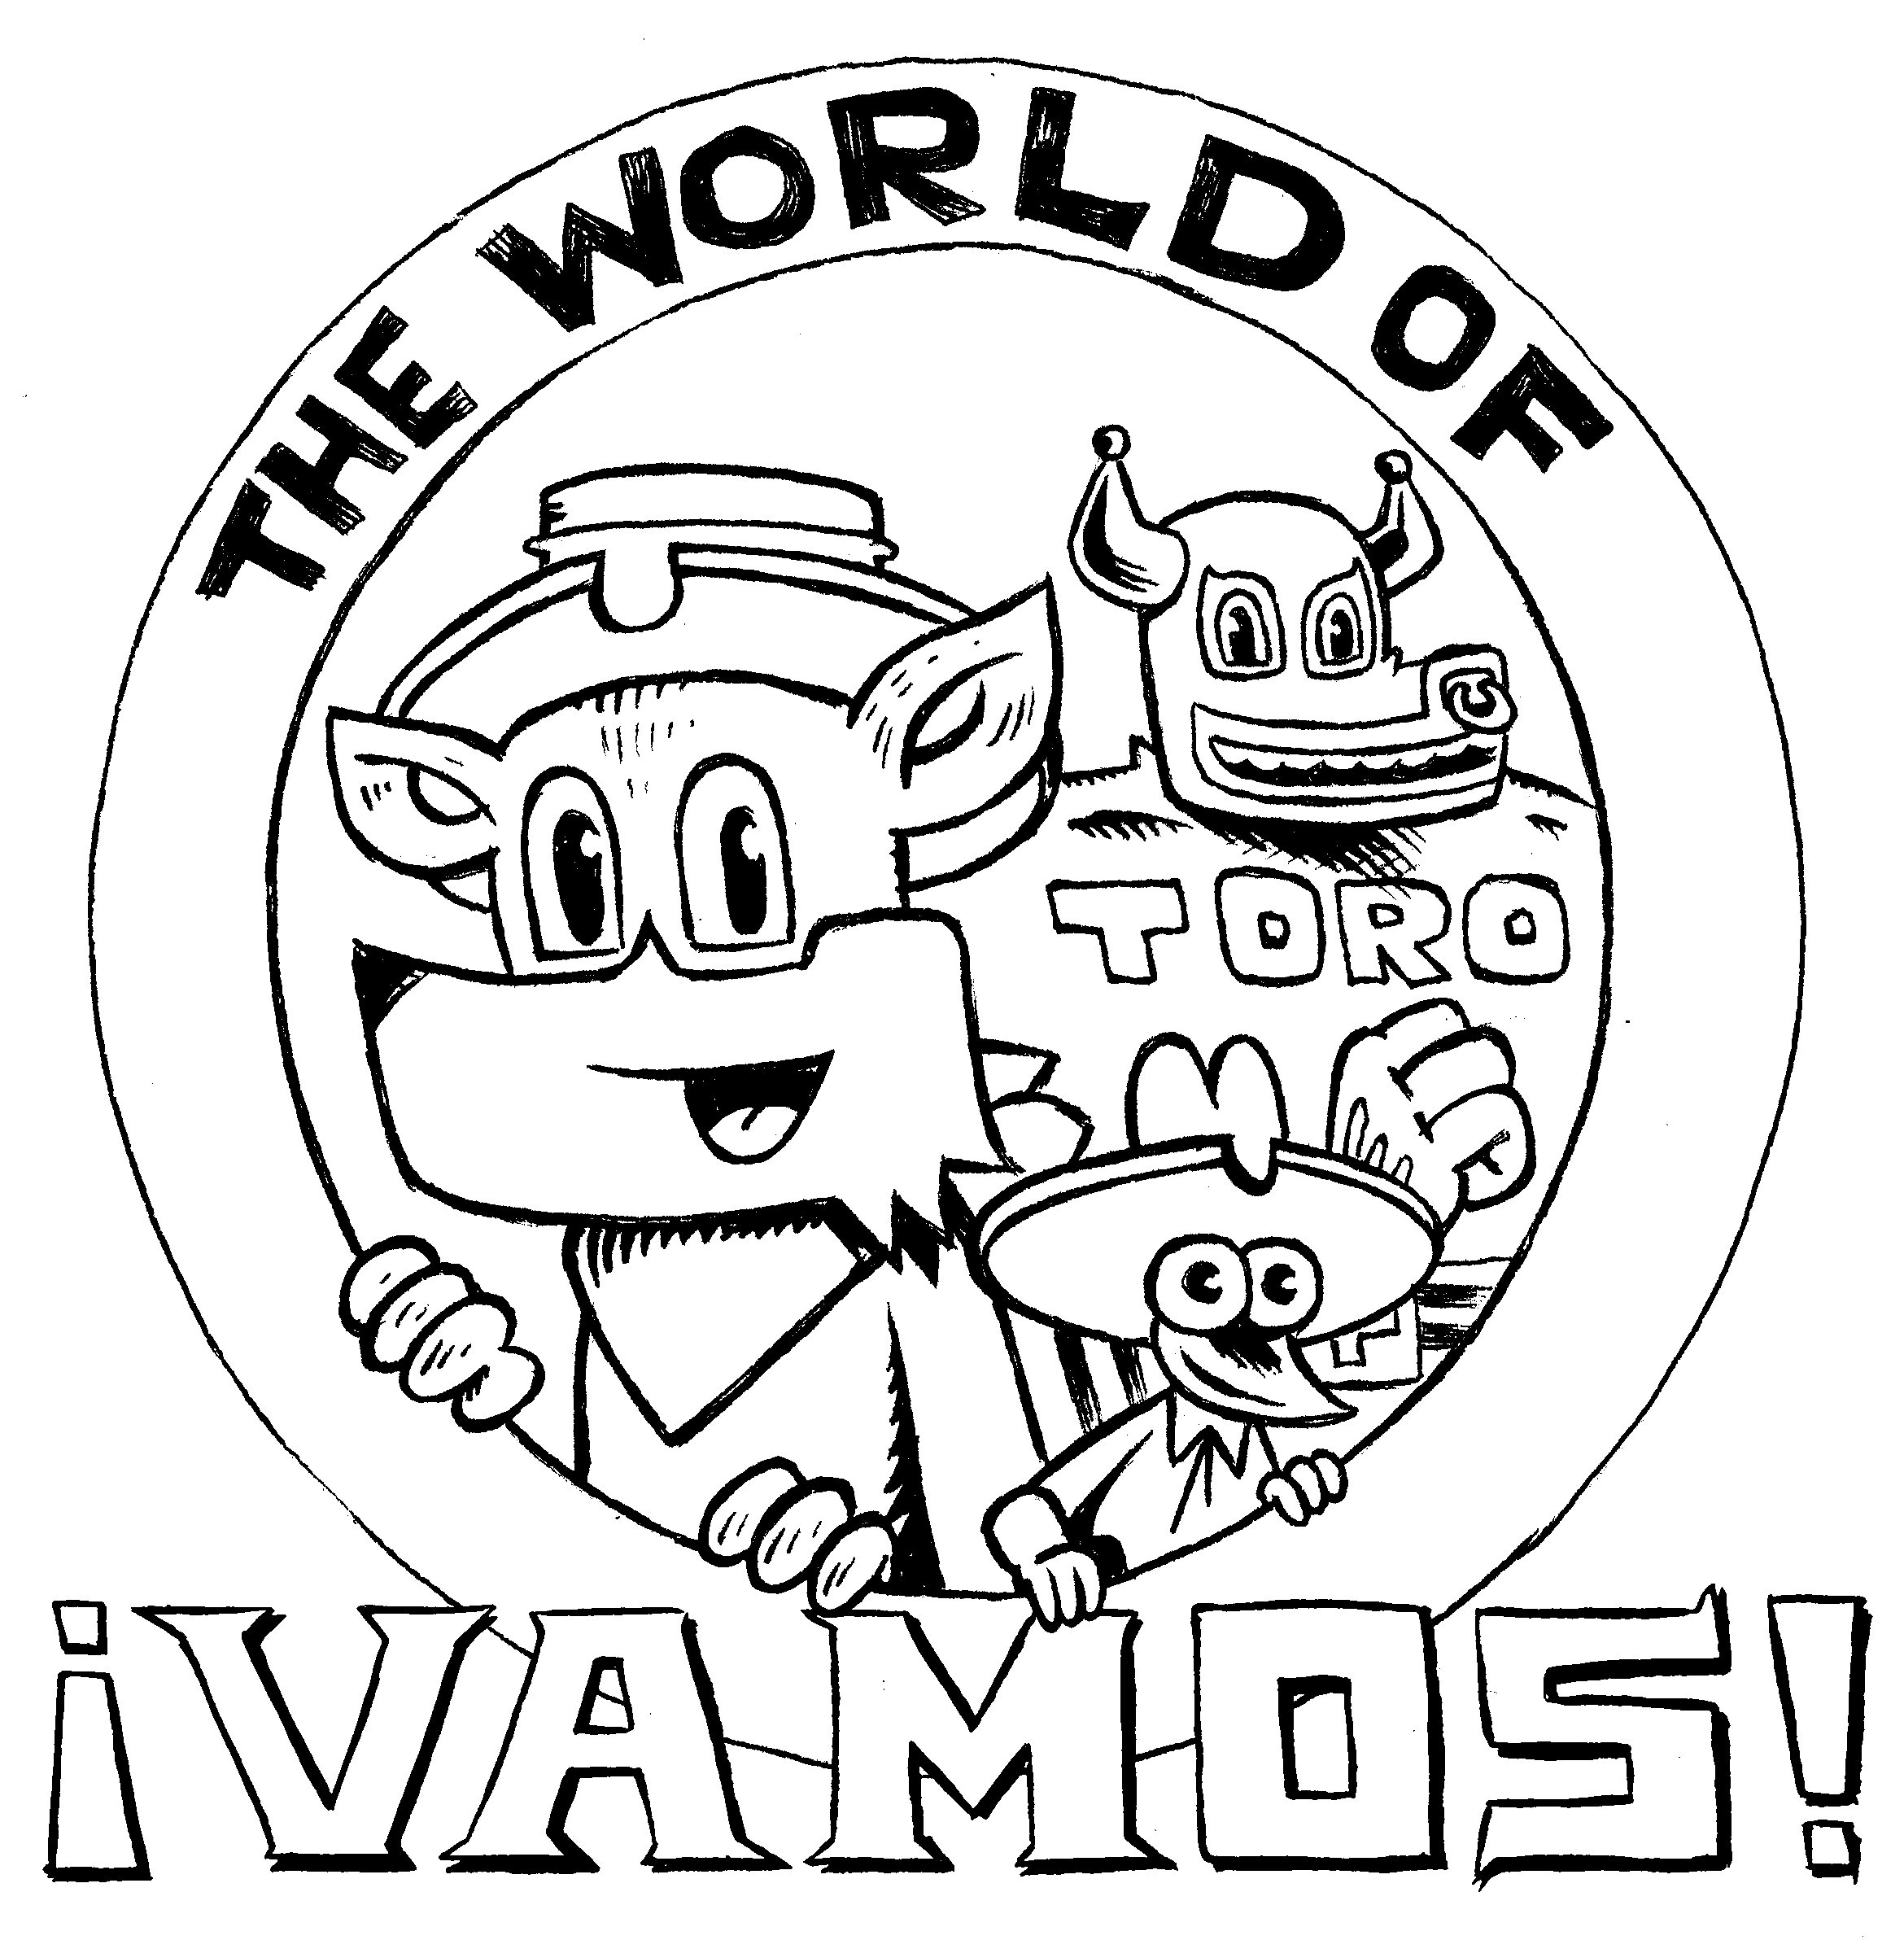  THE WORLD OF !VAMOS! TORO